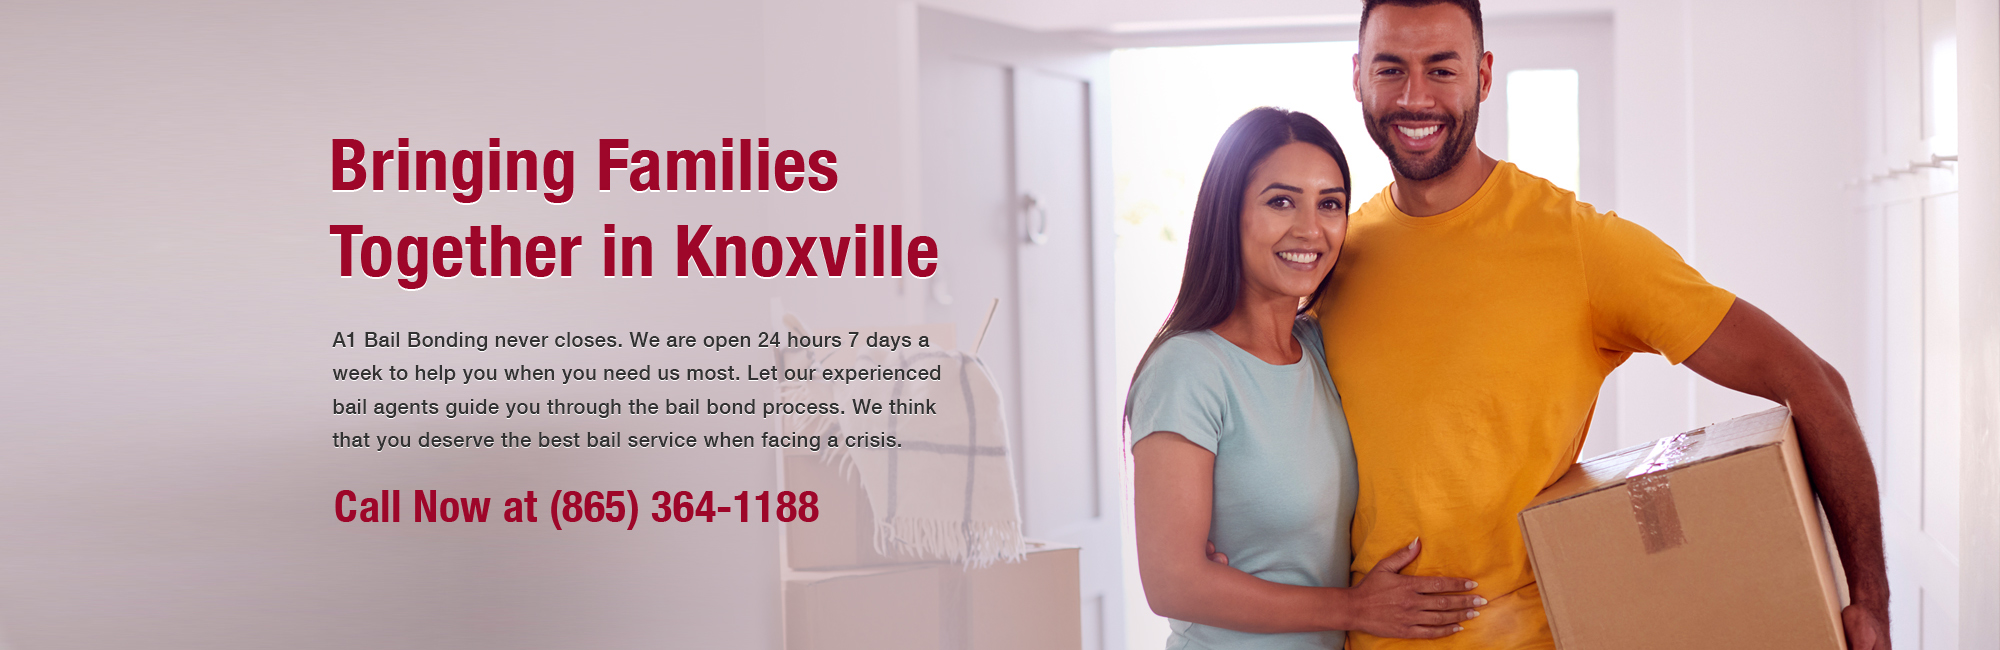 knoxville bail bonds